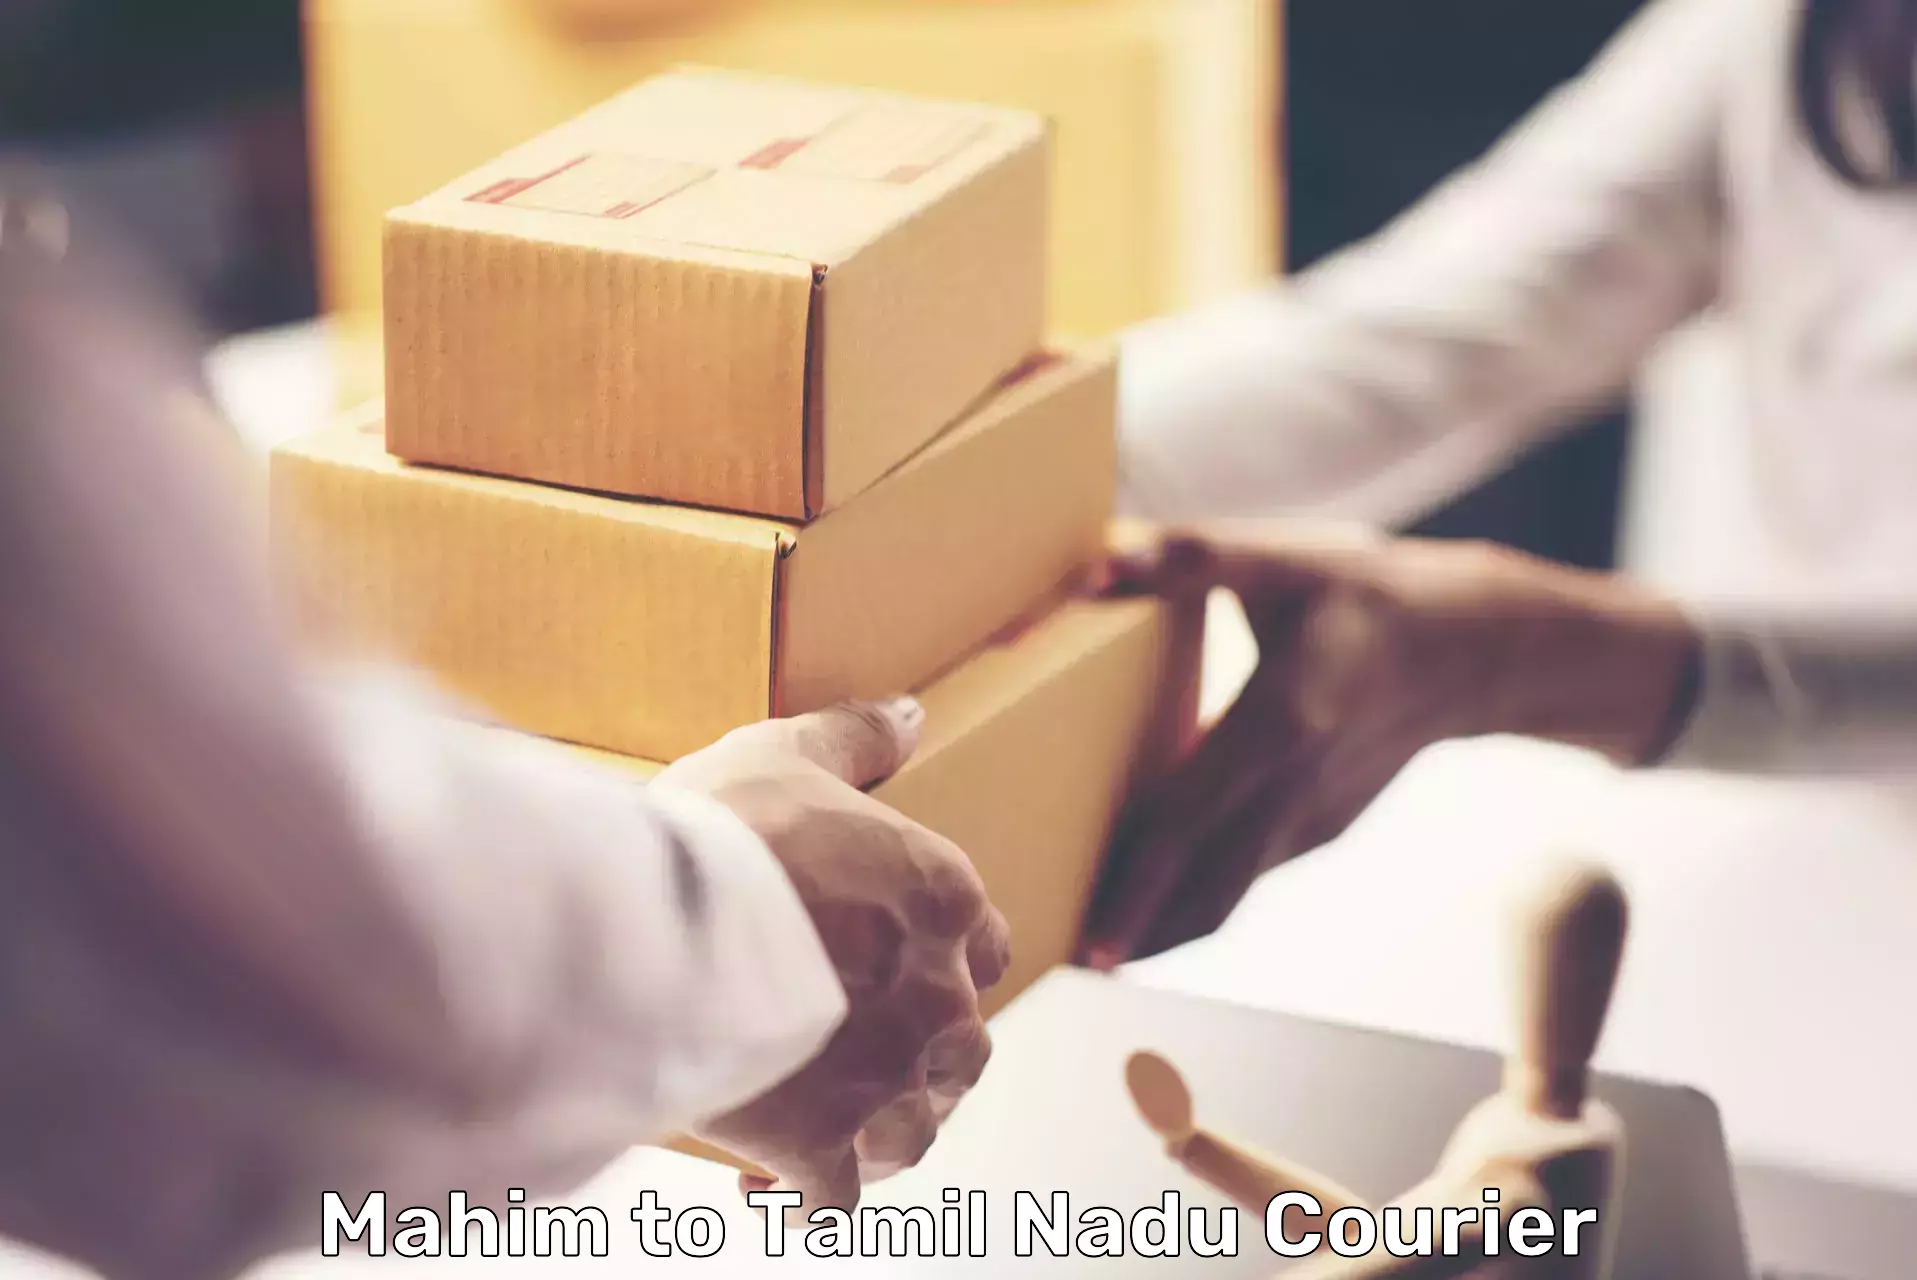 Digital courier platforms Mahim to Tiruchendur